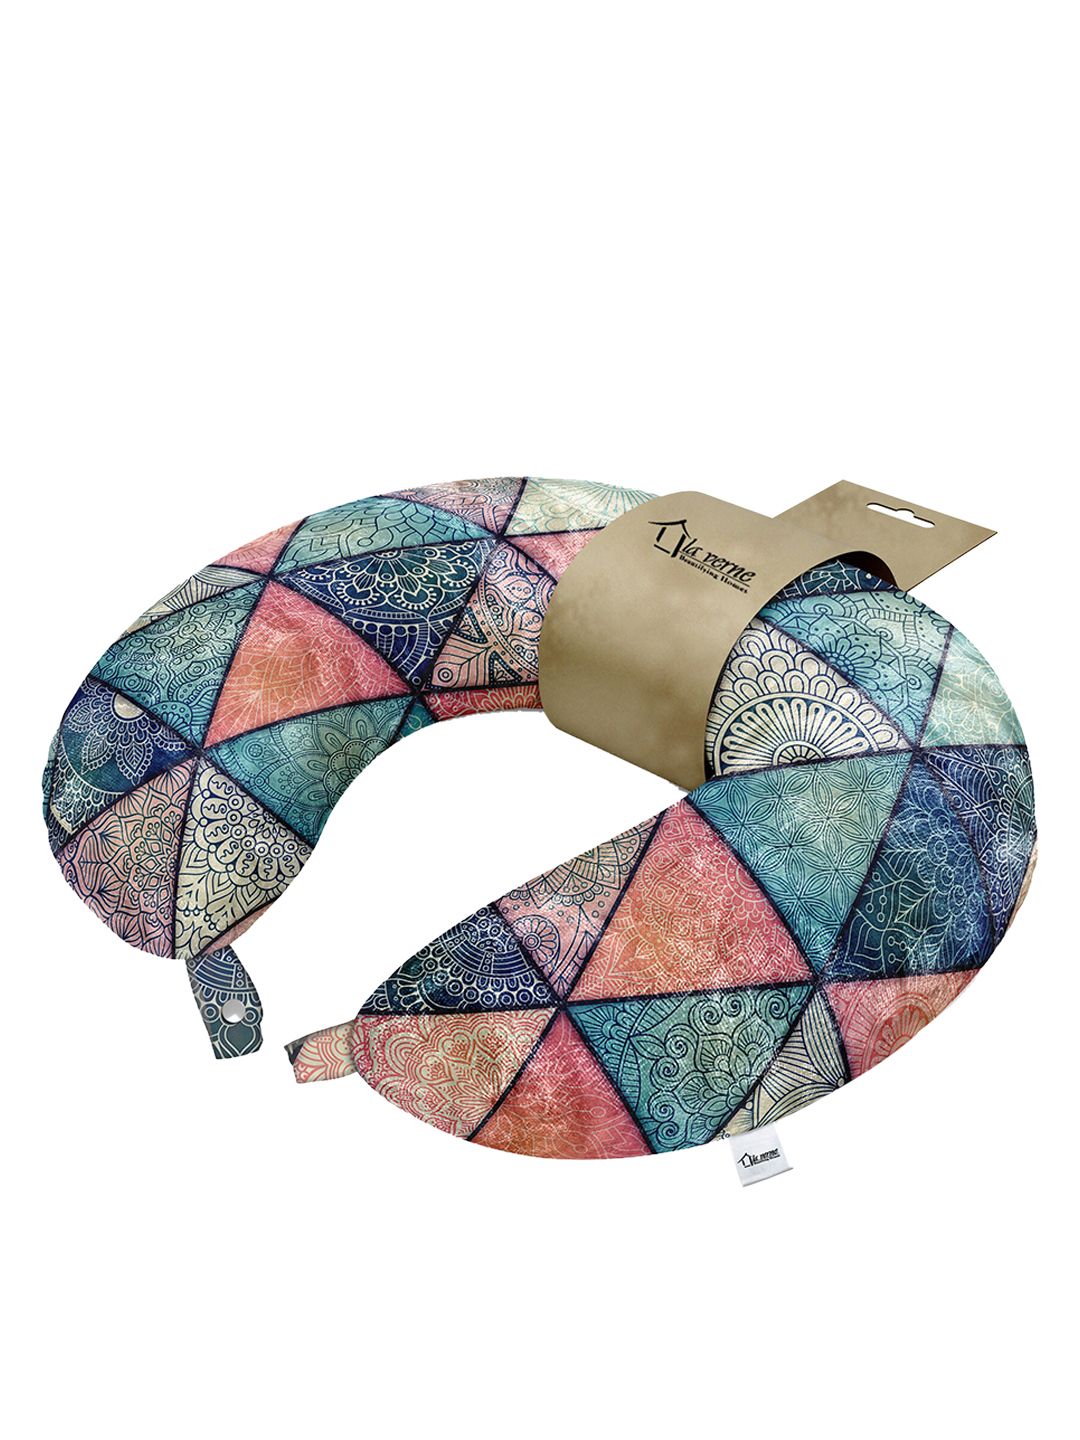 LA VERNE Multicoloured Printed Travel Neck Pillow Price in India